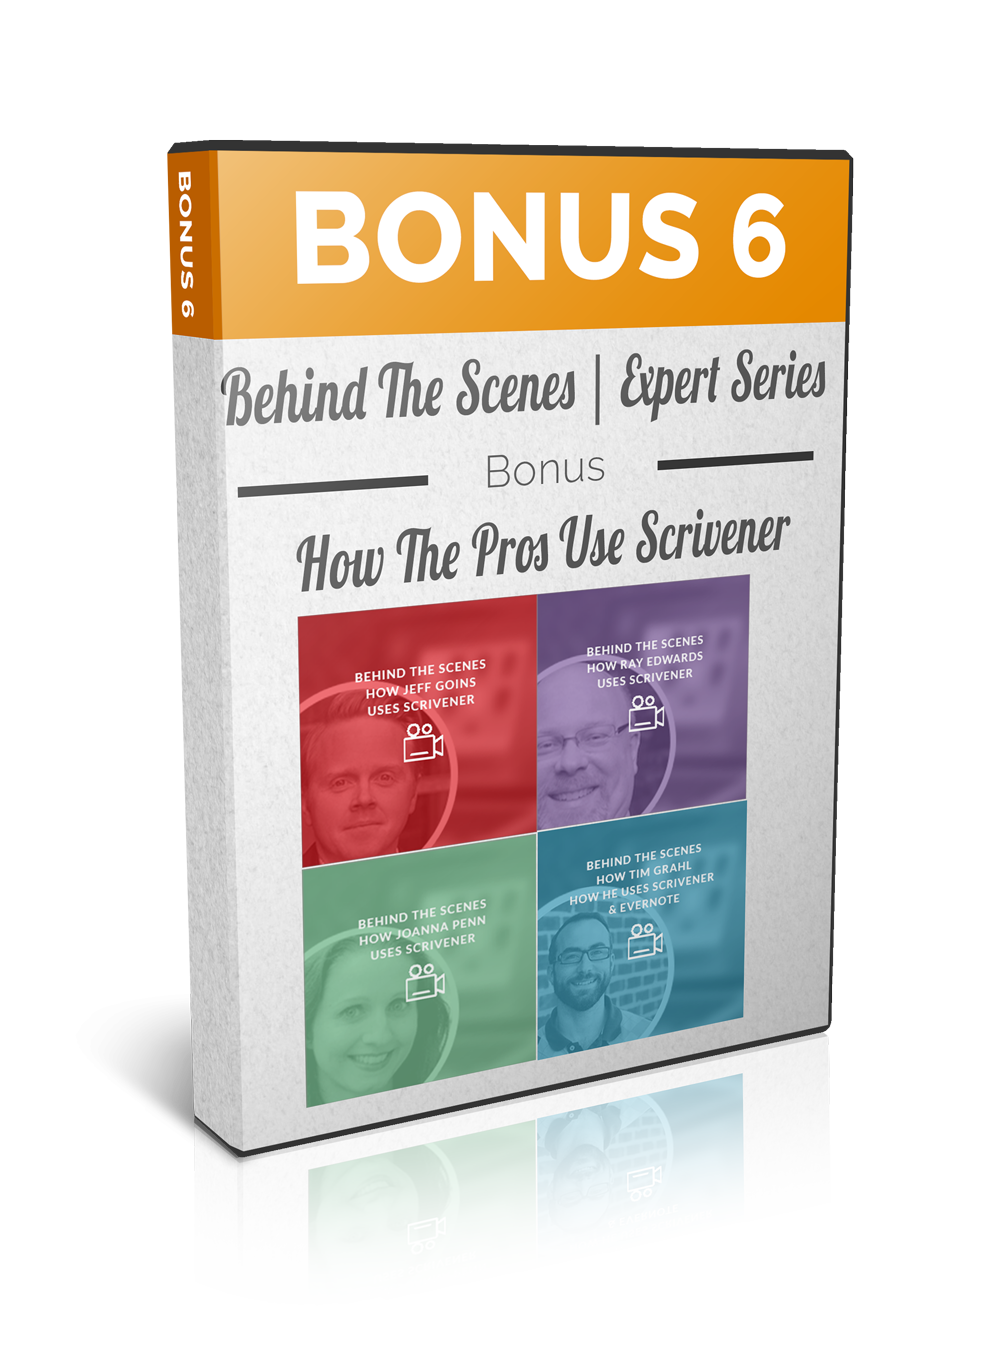 www.learn-scrivener-fast.com Scrivener Training & Coaching Course - Bonus 6 - Behind The Scenes How Pros Use Scrivener